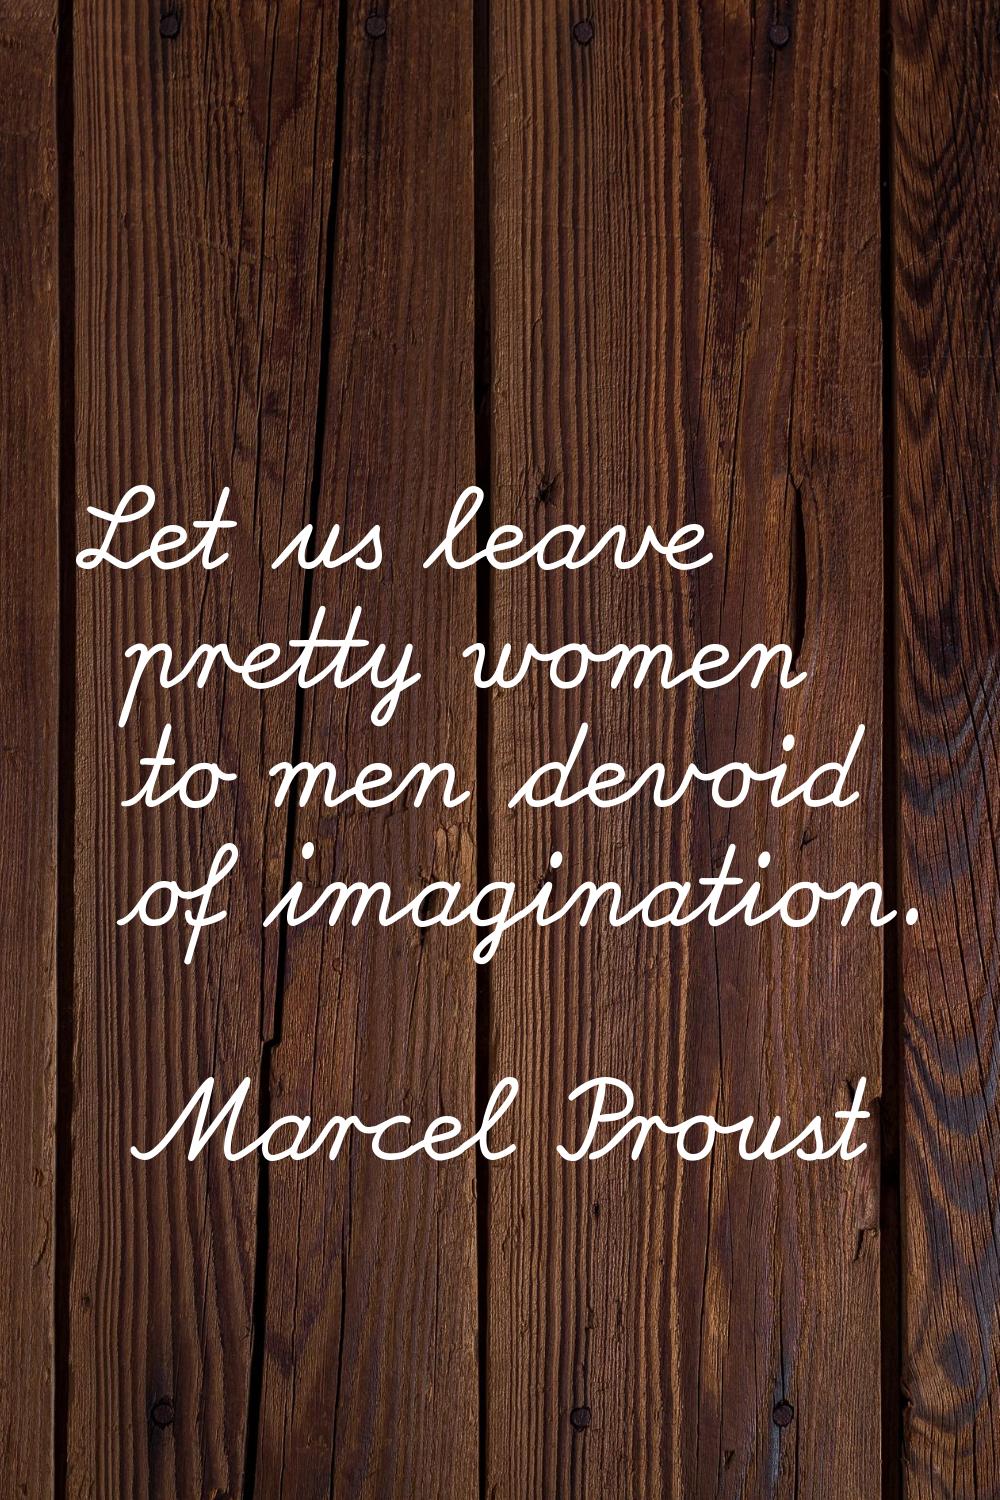 Let us leave pretty women to men devoid of imagination.